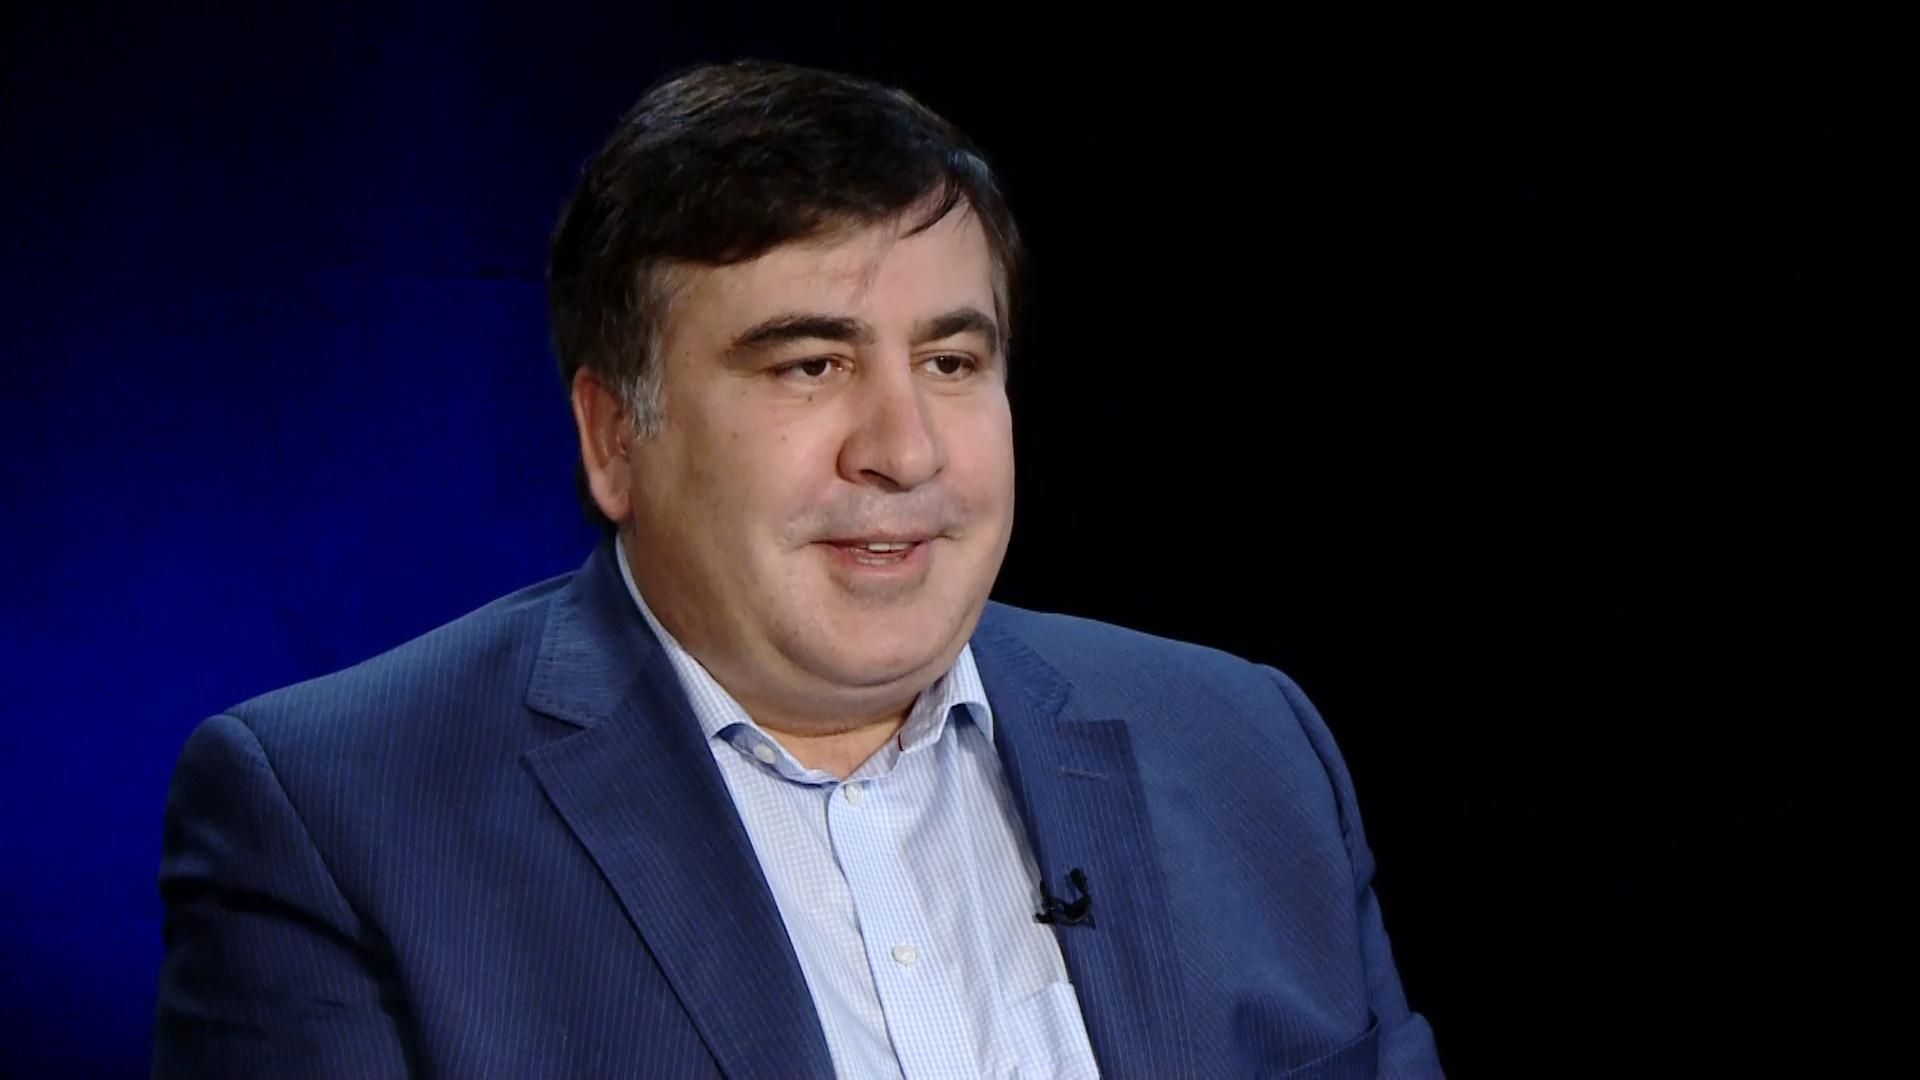 Саакашвили снова уехал в неизвестном направлении, – СМИ
